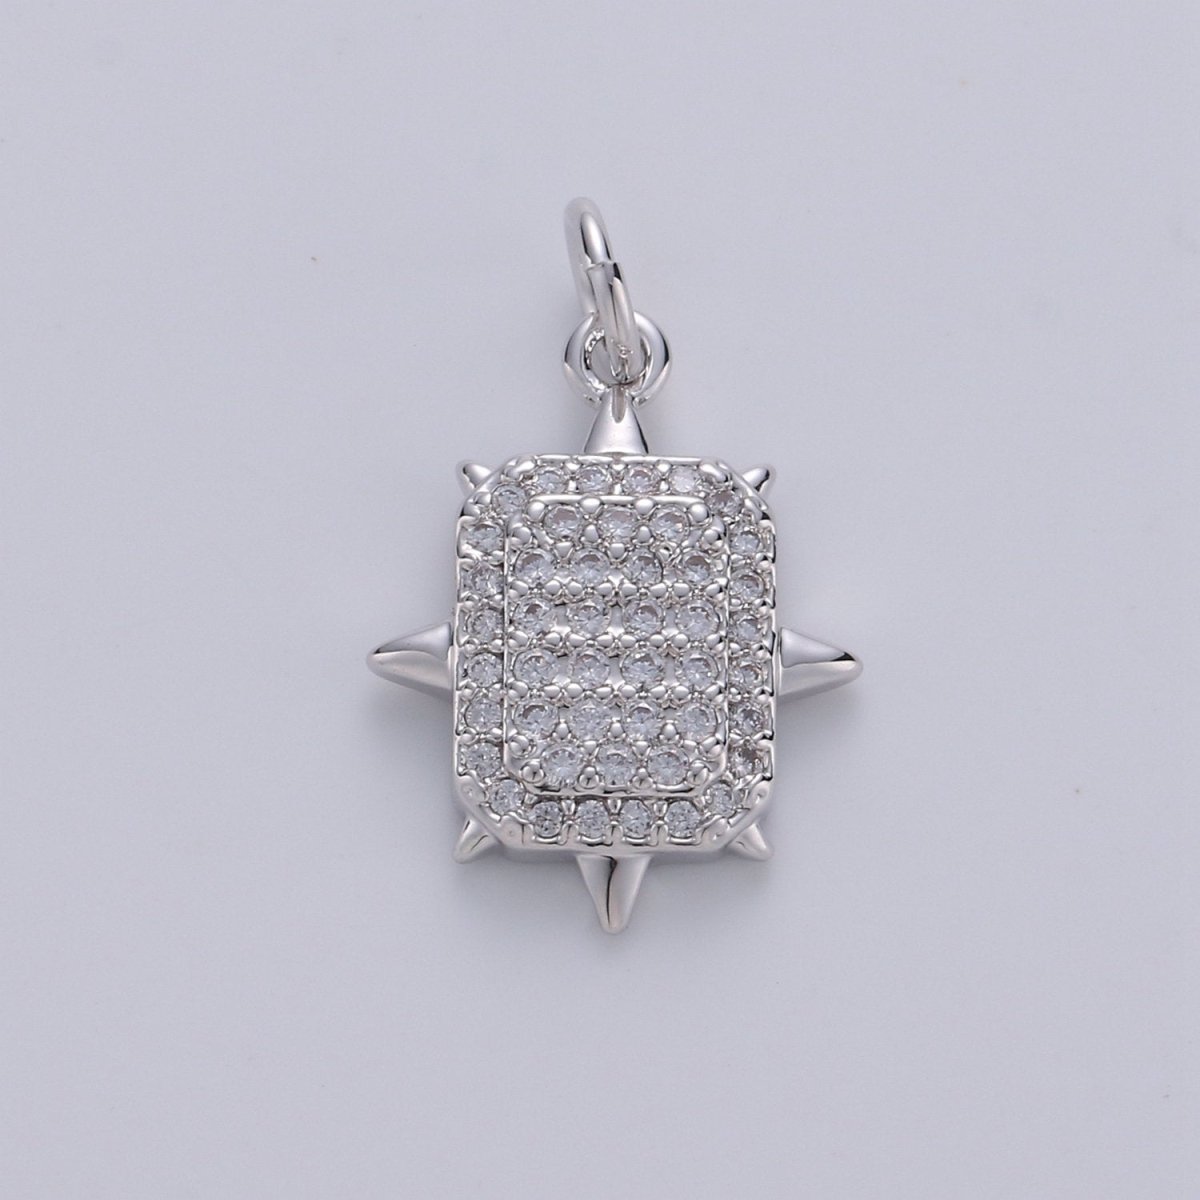 Gold Square Stud Charm, Micro Pave Cz Geometric Pendant, 20x14mm geometric Square charm for necklace earring bracelet supply D-527 D-528 - DLUXCA